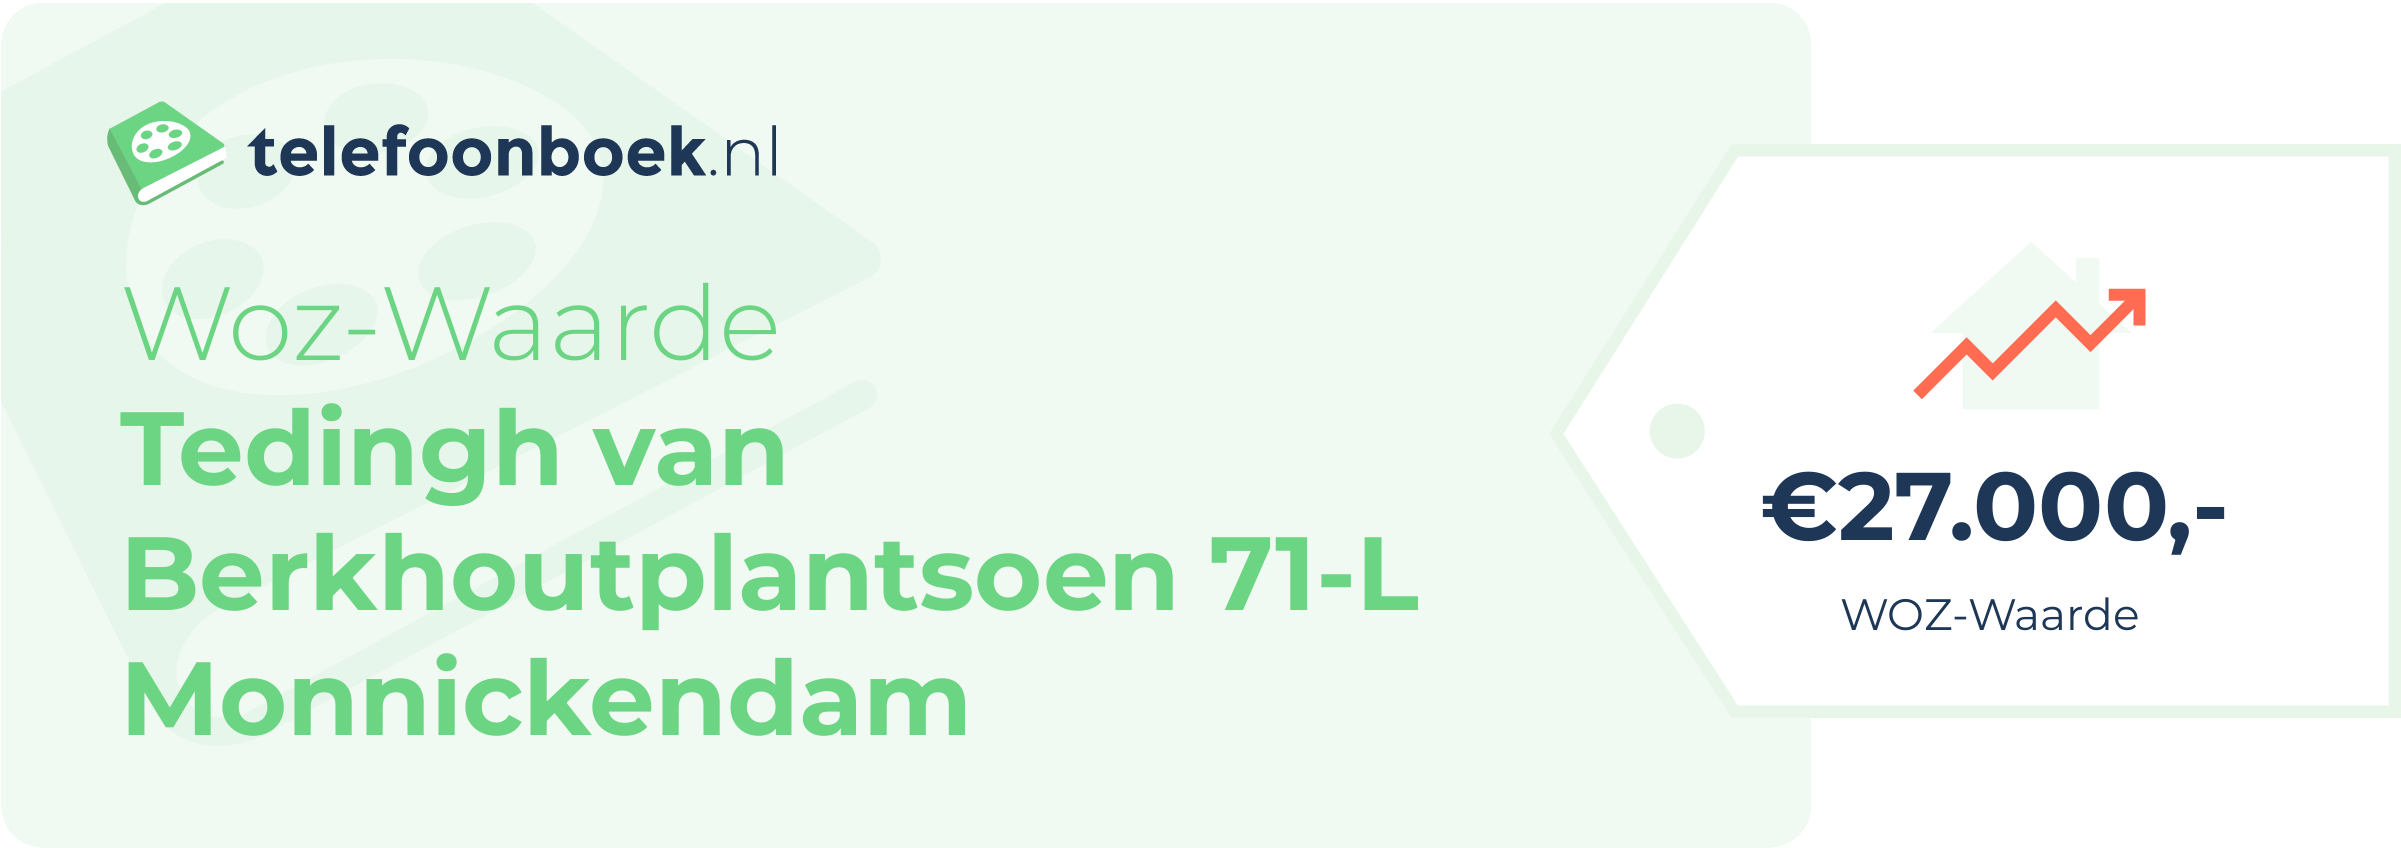 WOZ-waarde Tedingh Van Berkhoutplantsoen 71-L Monnickendam